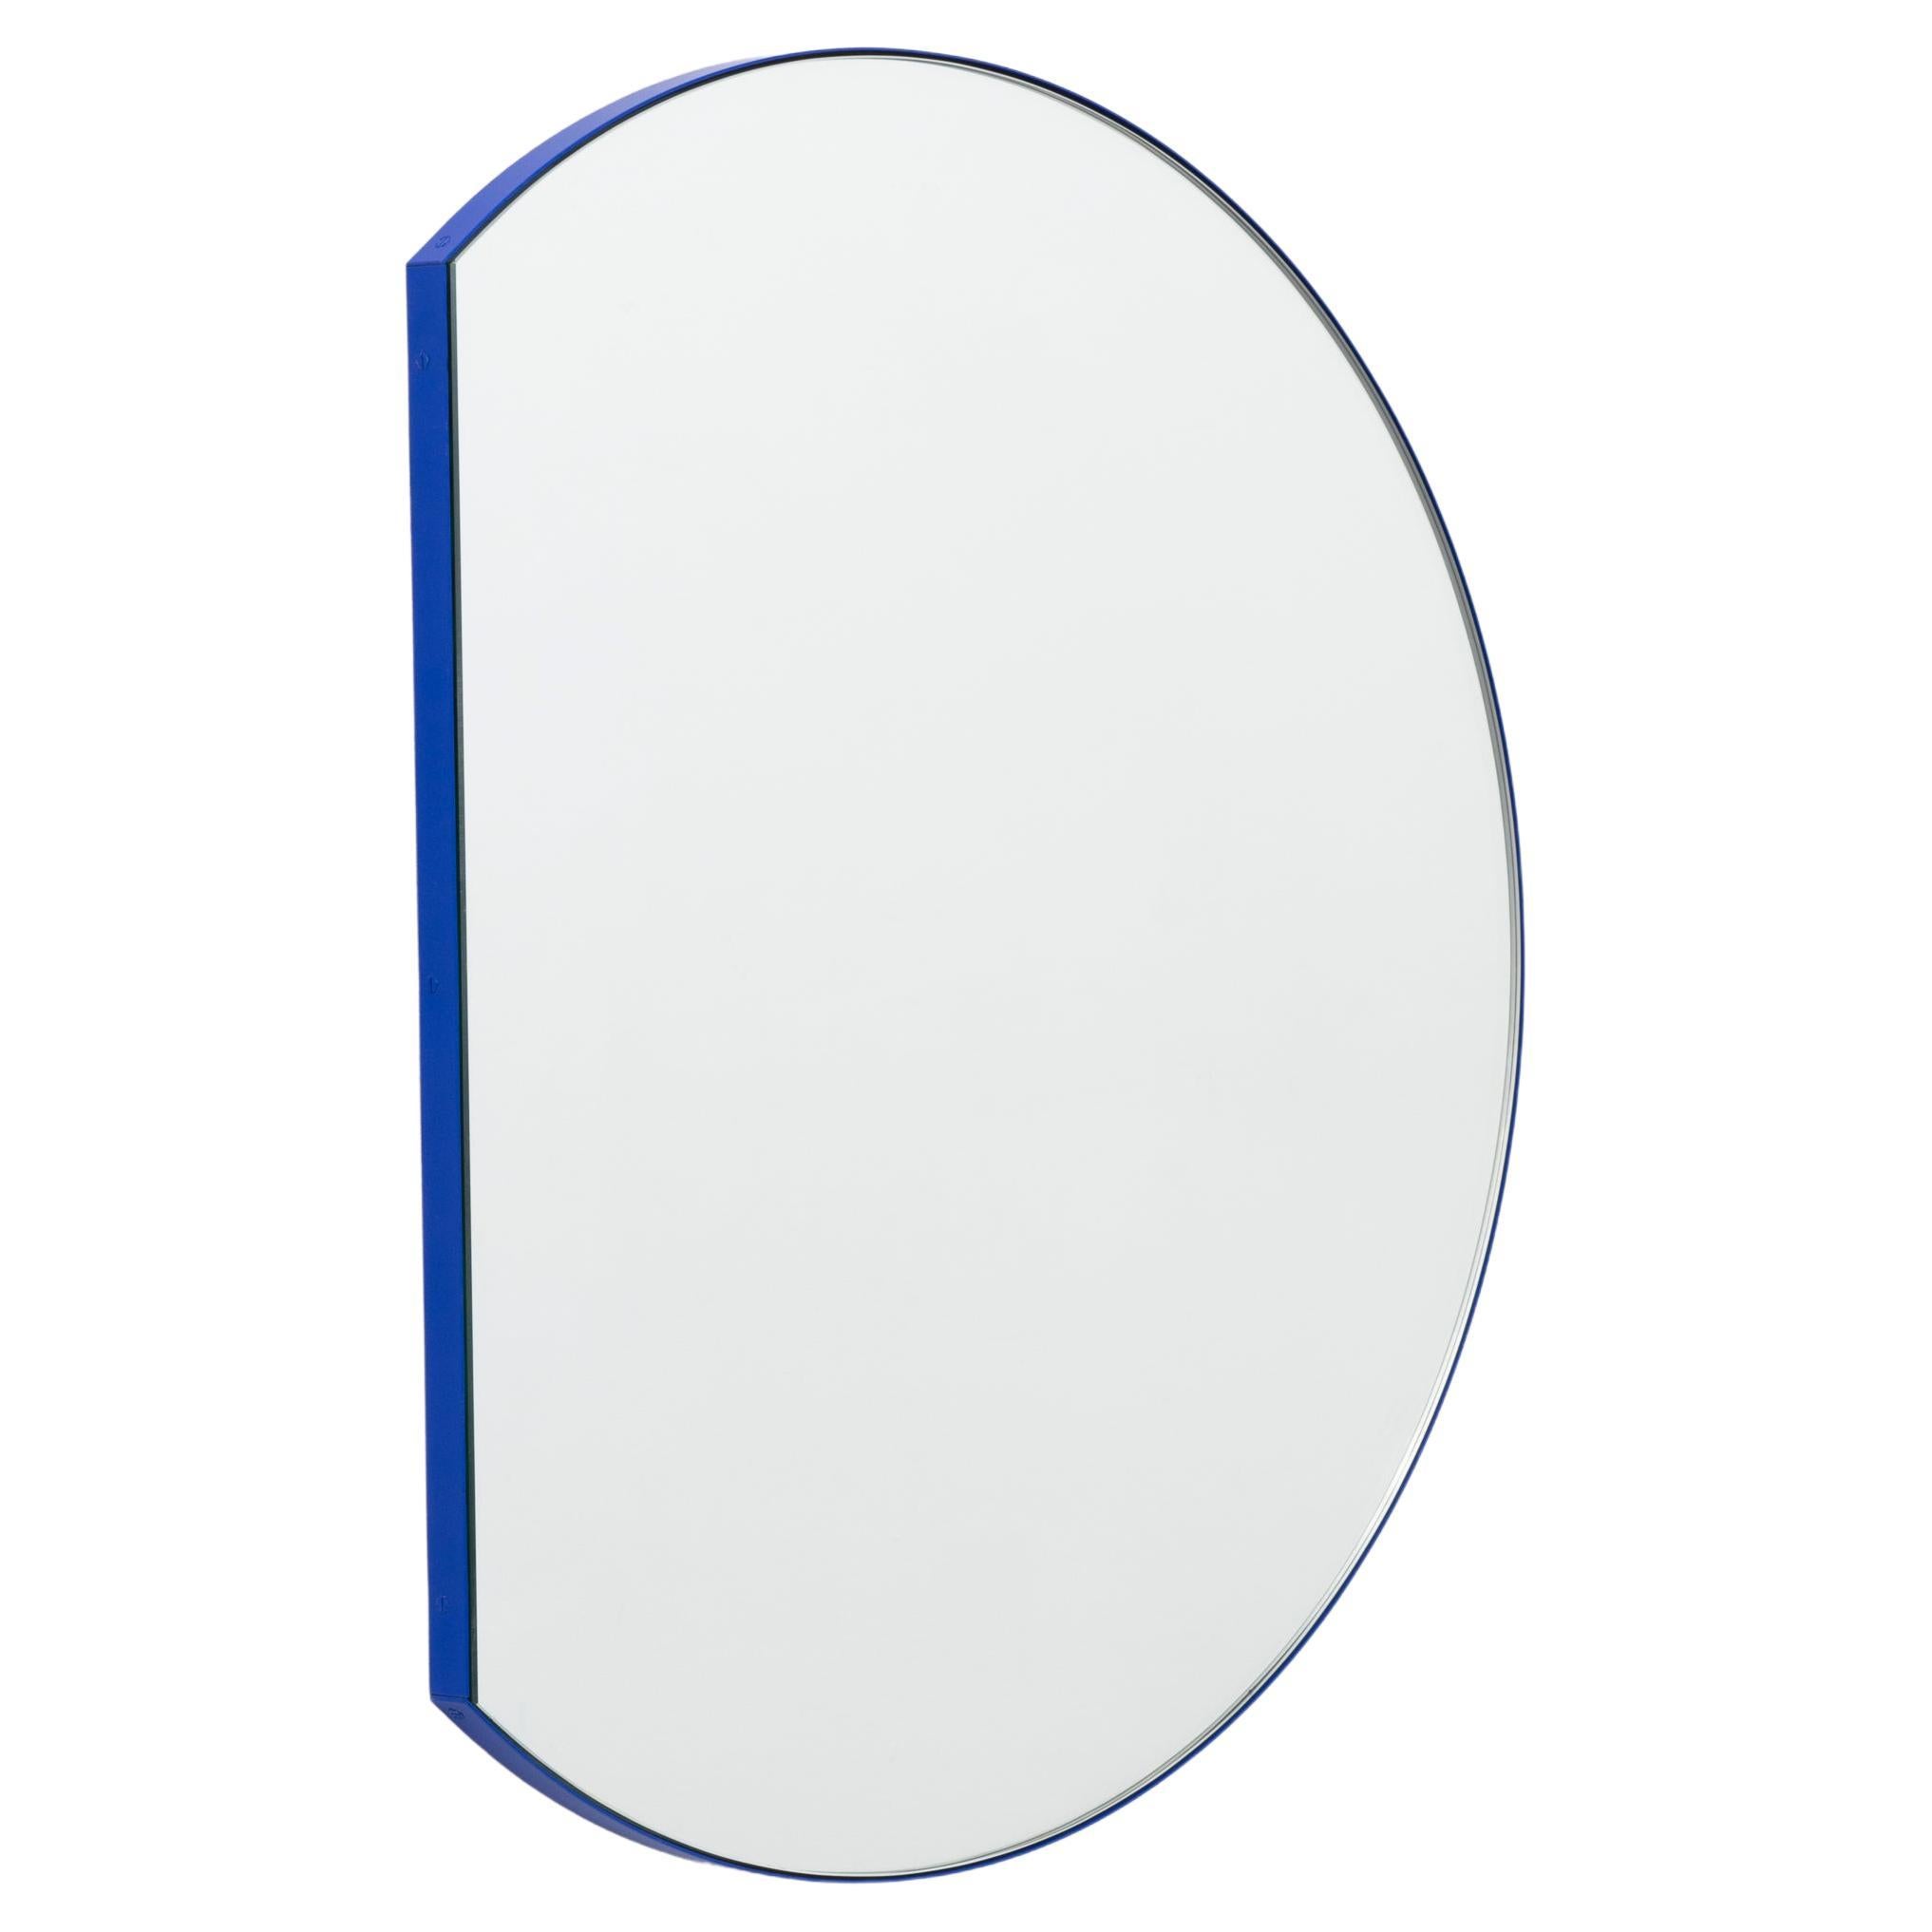 En stock Miroir rond moderne en forme de trèfle Orbis Trecus, cadre bleu, moyen en vente